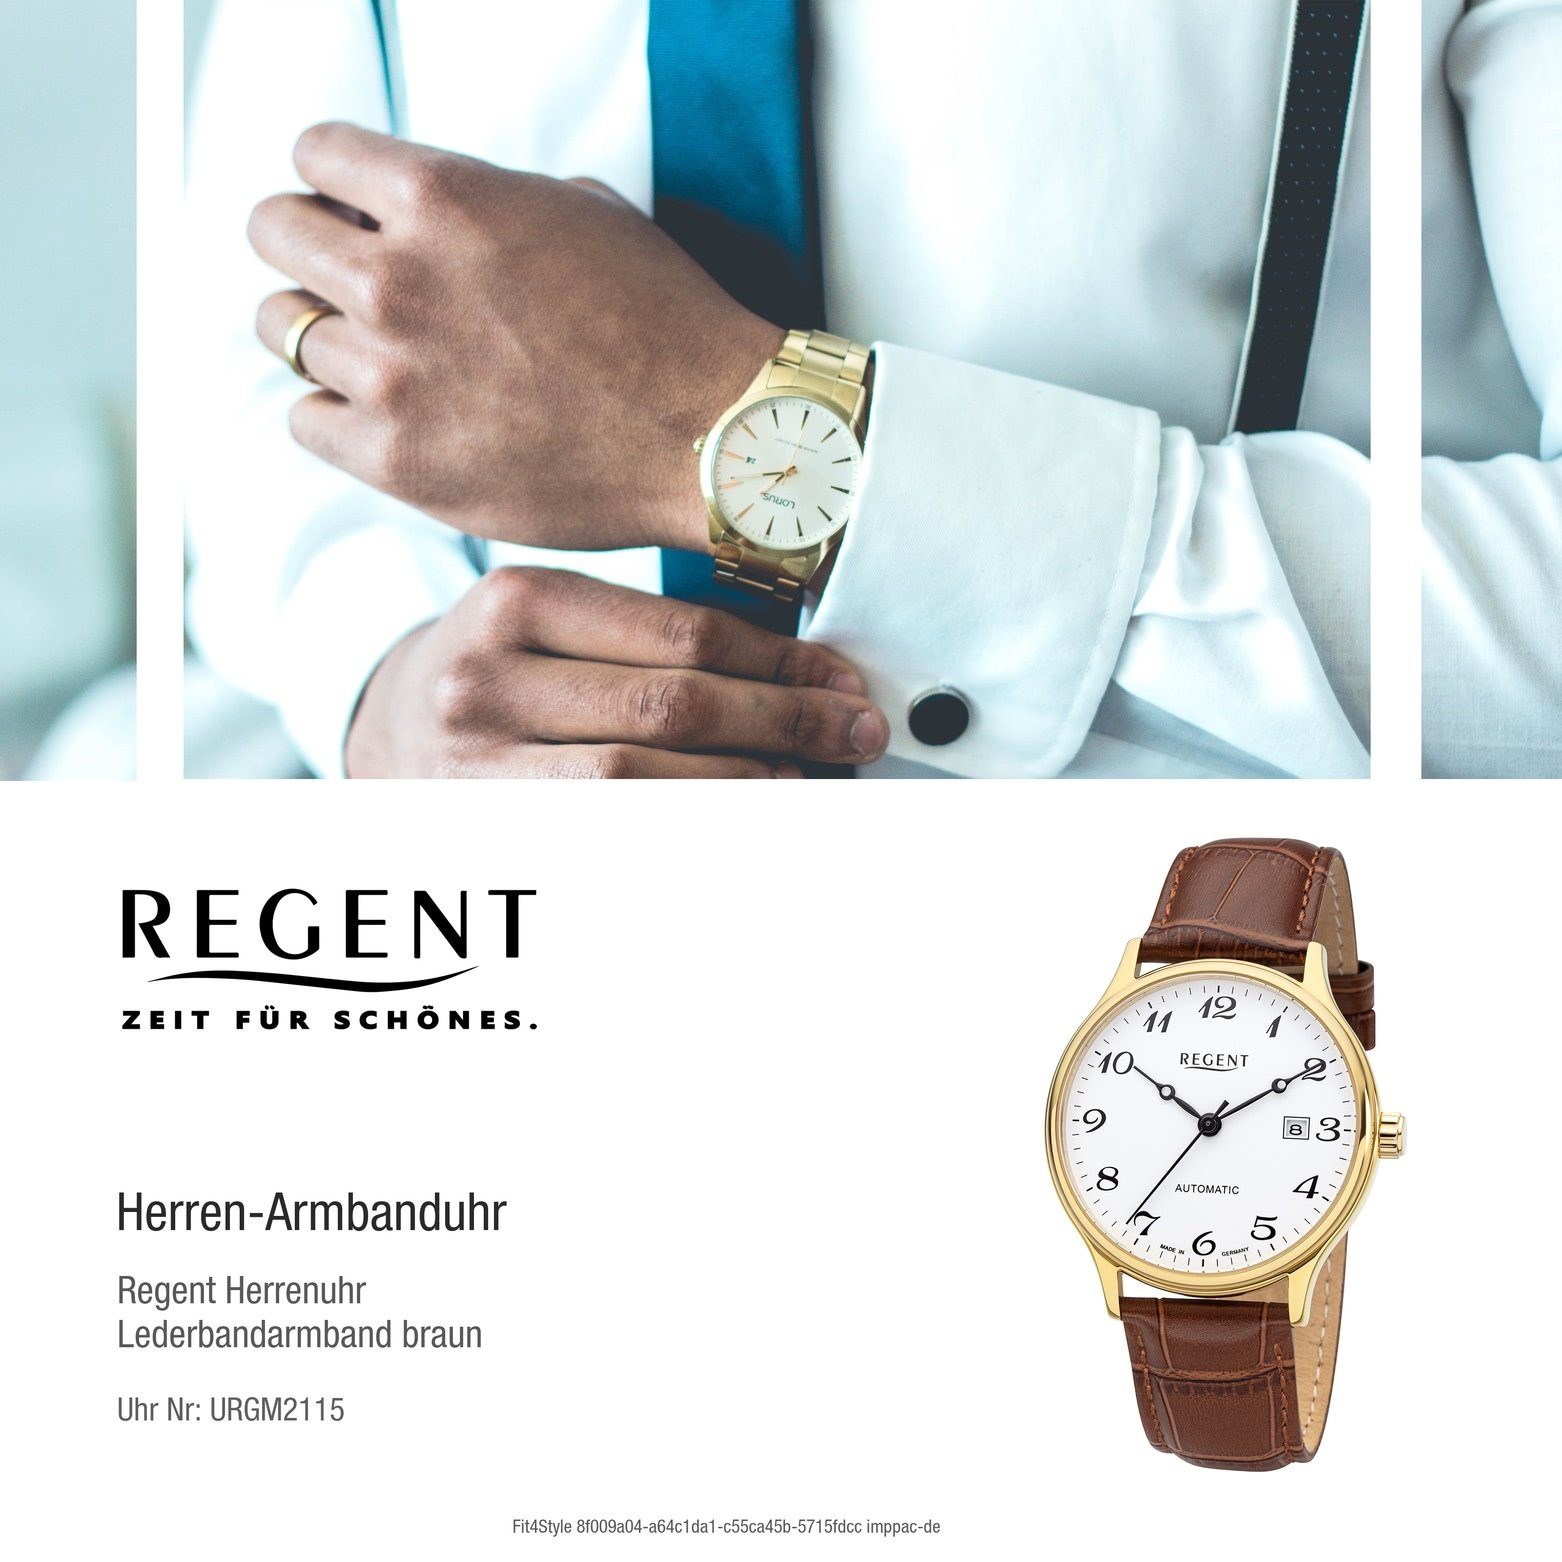 Regent Quarzuhr Regent Herren Armbanduhr Analoganzeige, Armbanduhr groß 40mm), Herren (ca. Lederbandarmband rund